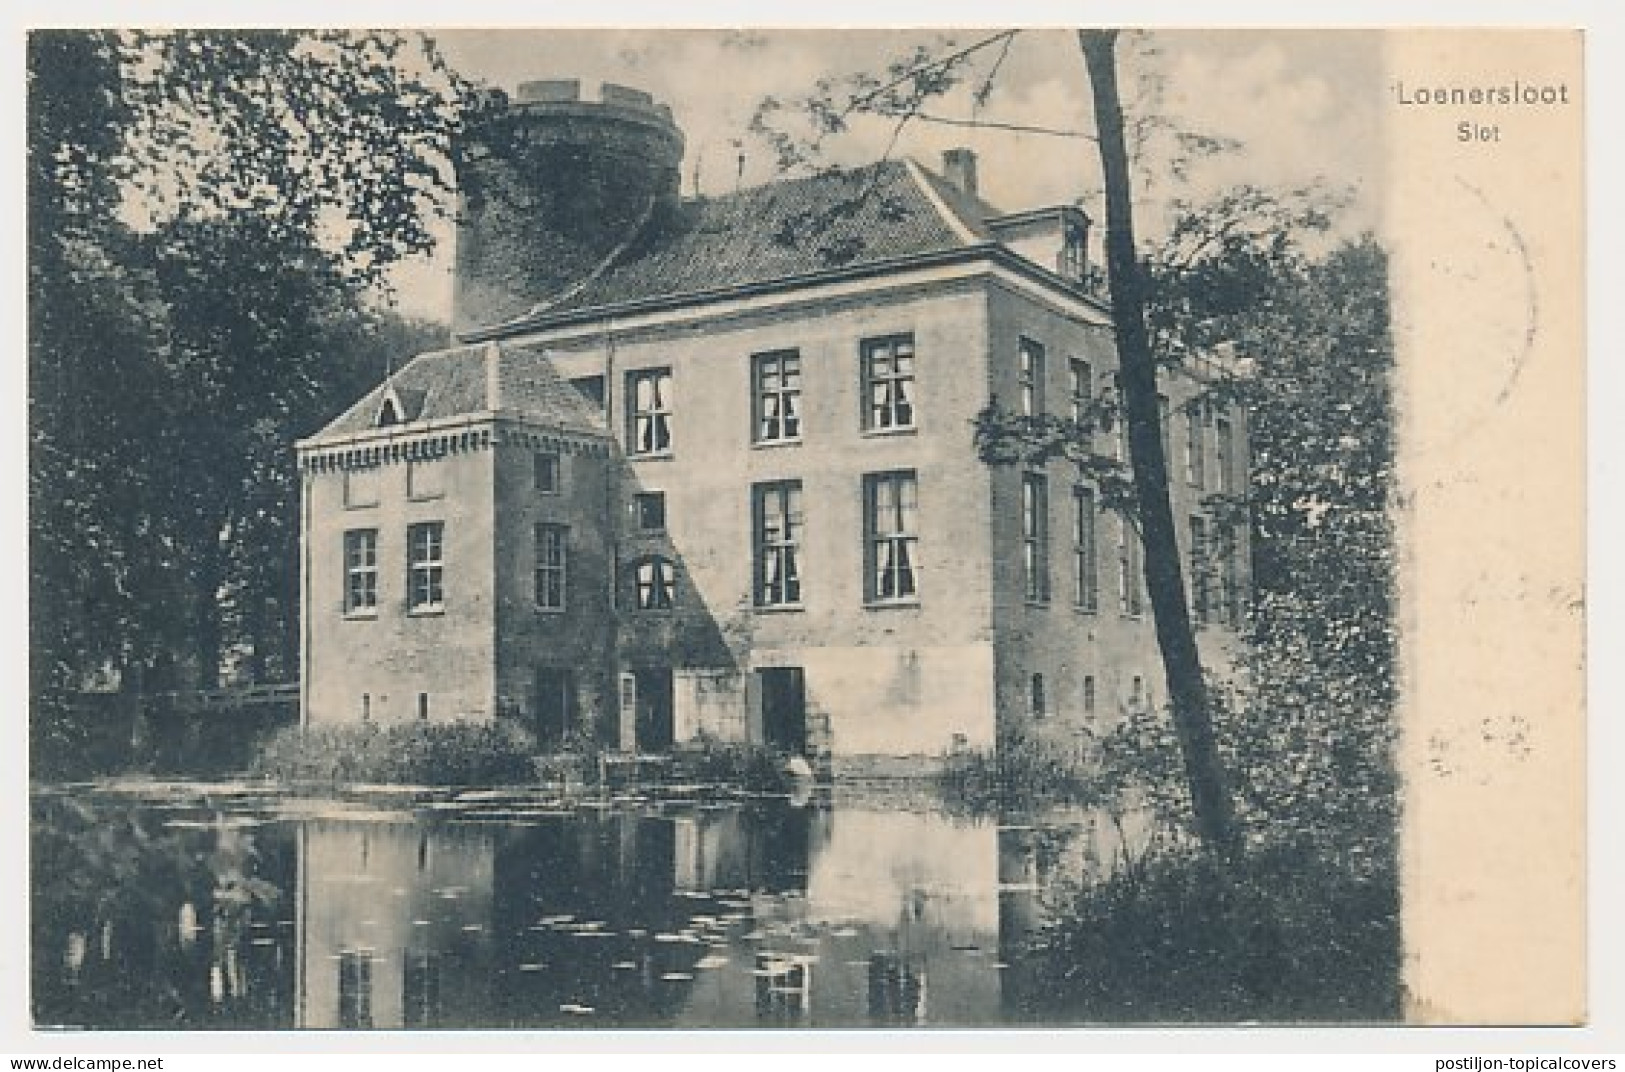 Kleinrondstempel Loenersloot 1908 - Non Classés